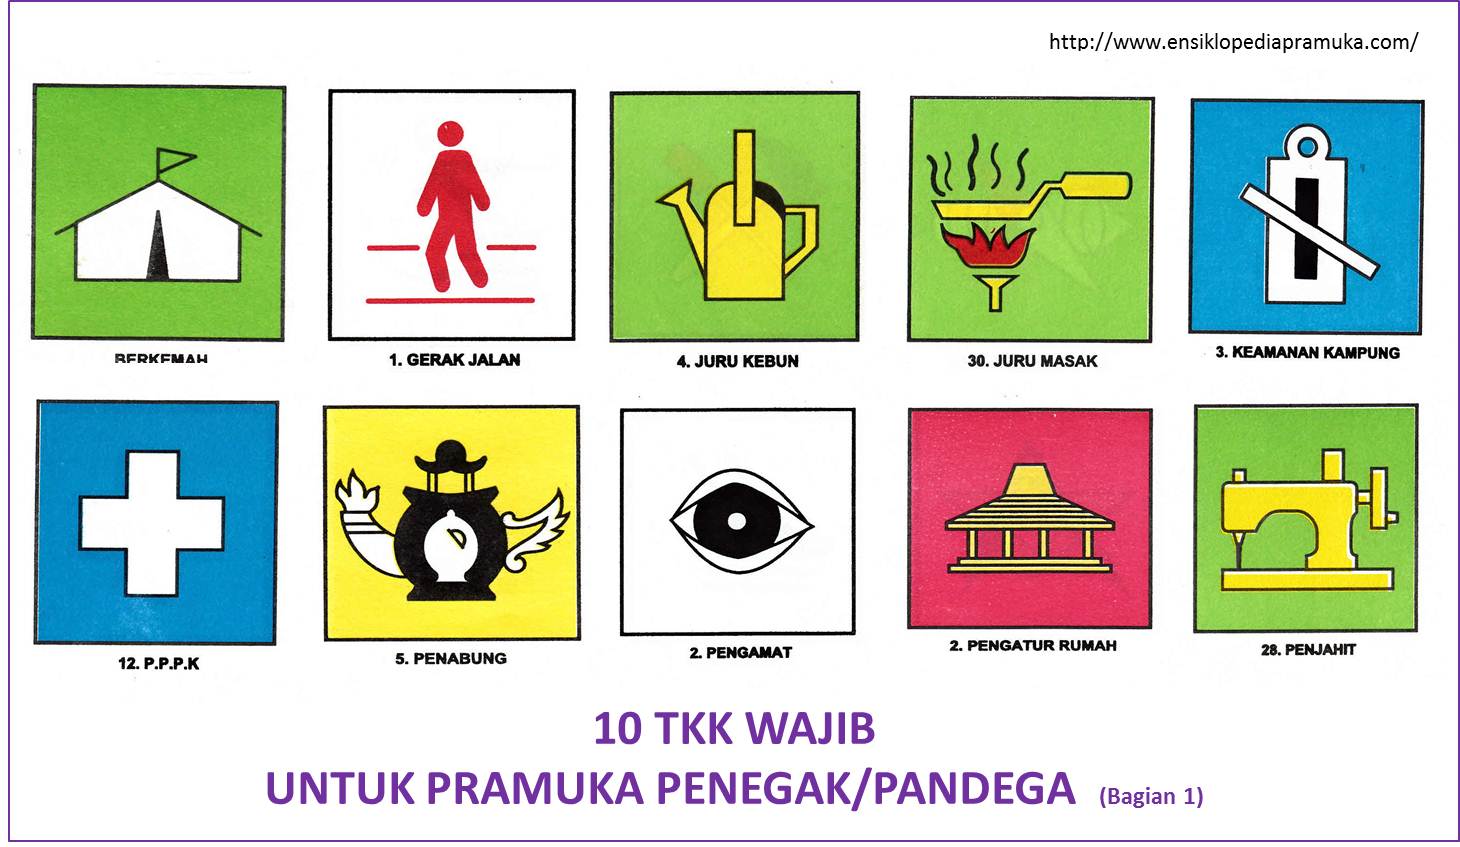 Ensiklopedia Pramuka Skk Tkk Wajib Penegak Pandega Bagian 1 5 Dari 10 Jenis Skk Tkk Wajib